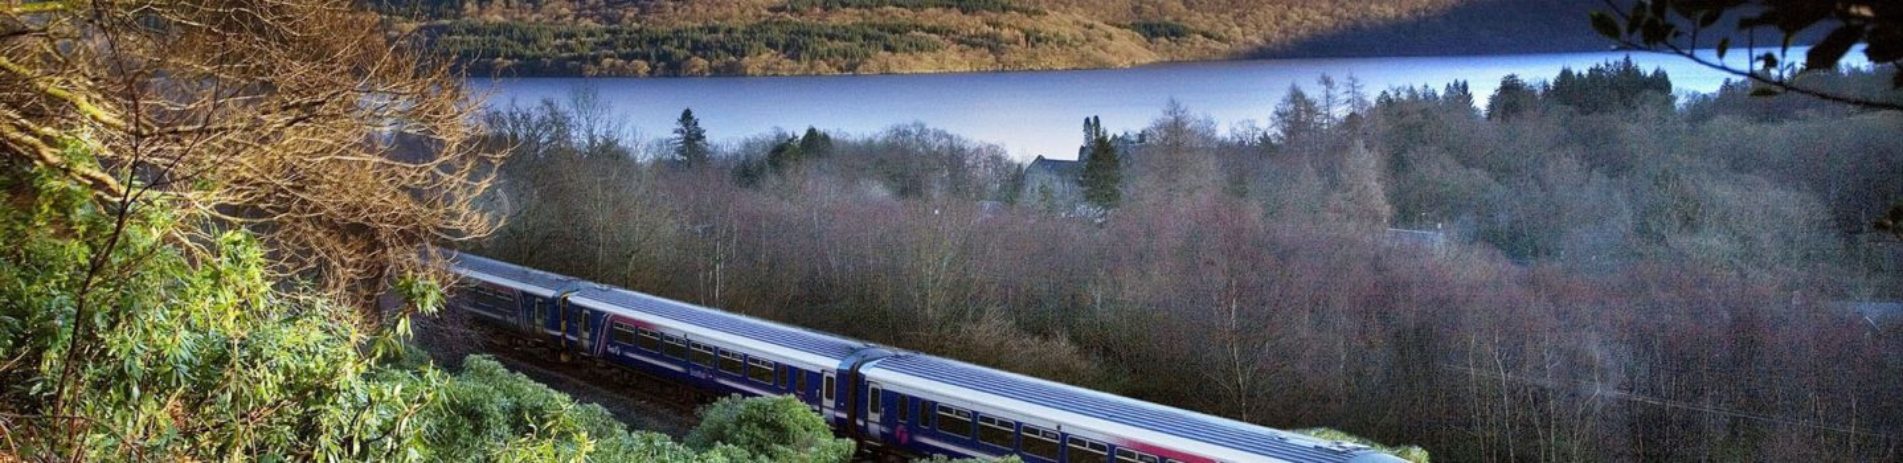 visit loch lomond by train